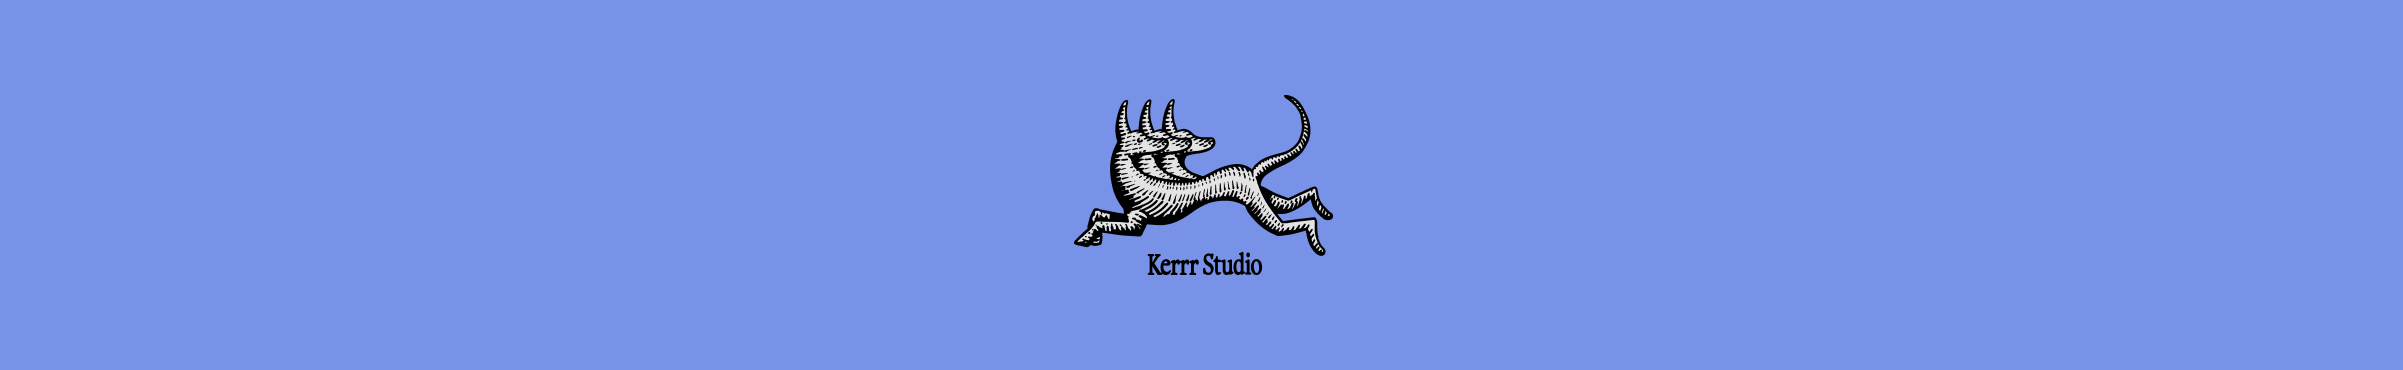 kerrr studio's profile banner